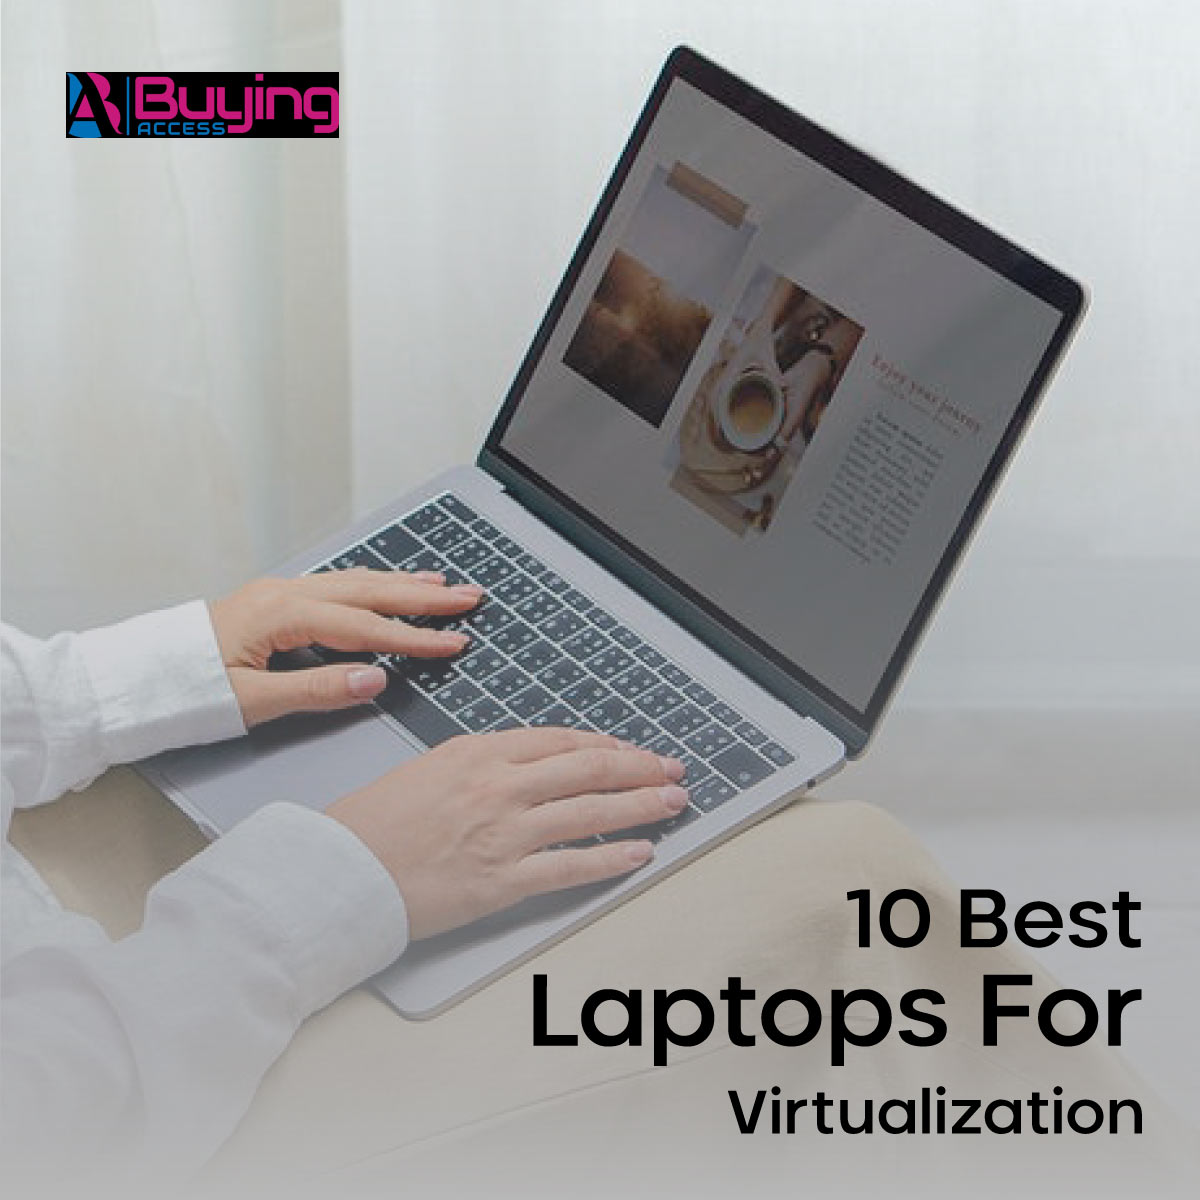 Laptops for Virtualization